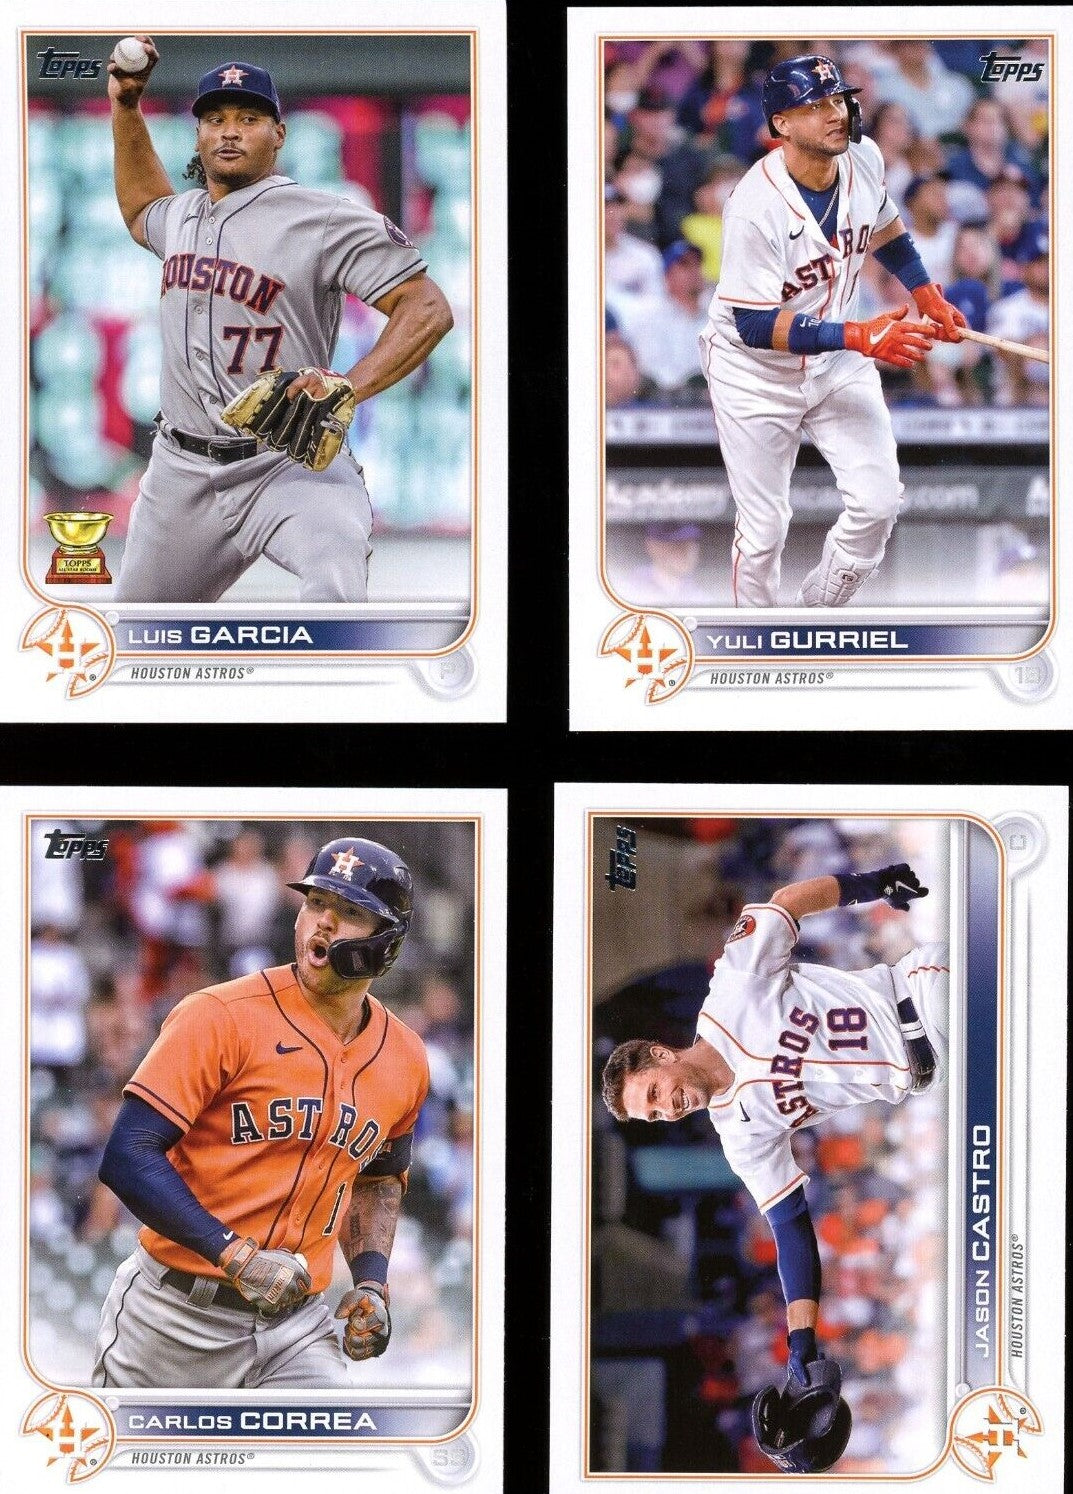 Houston Astros Baseball Half Sheet Misc. (Must Purchase 2 Half sheets –  Yippee Yay! Yard Cards